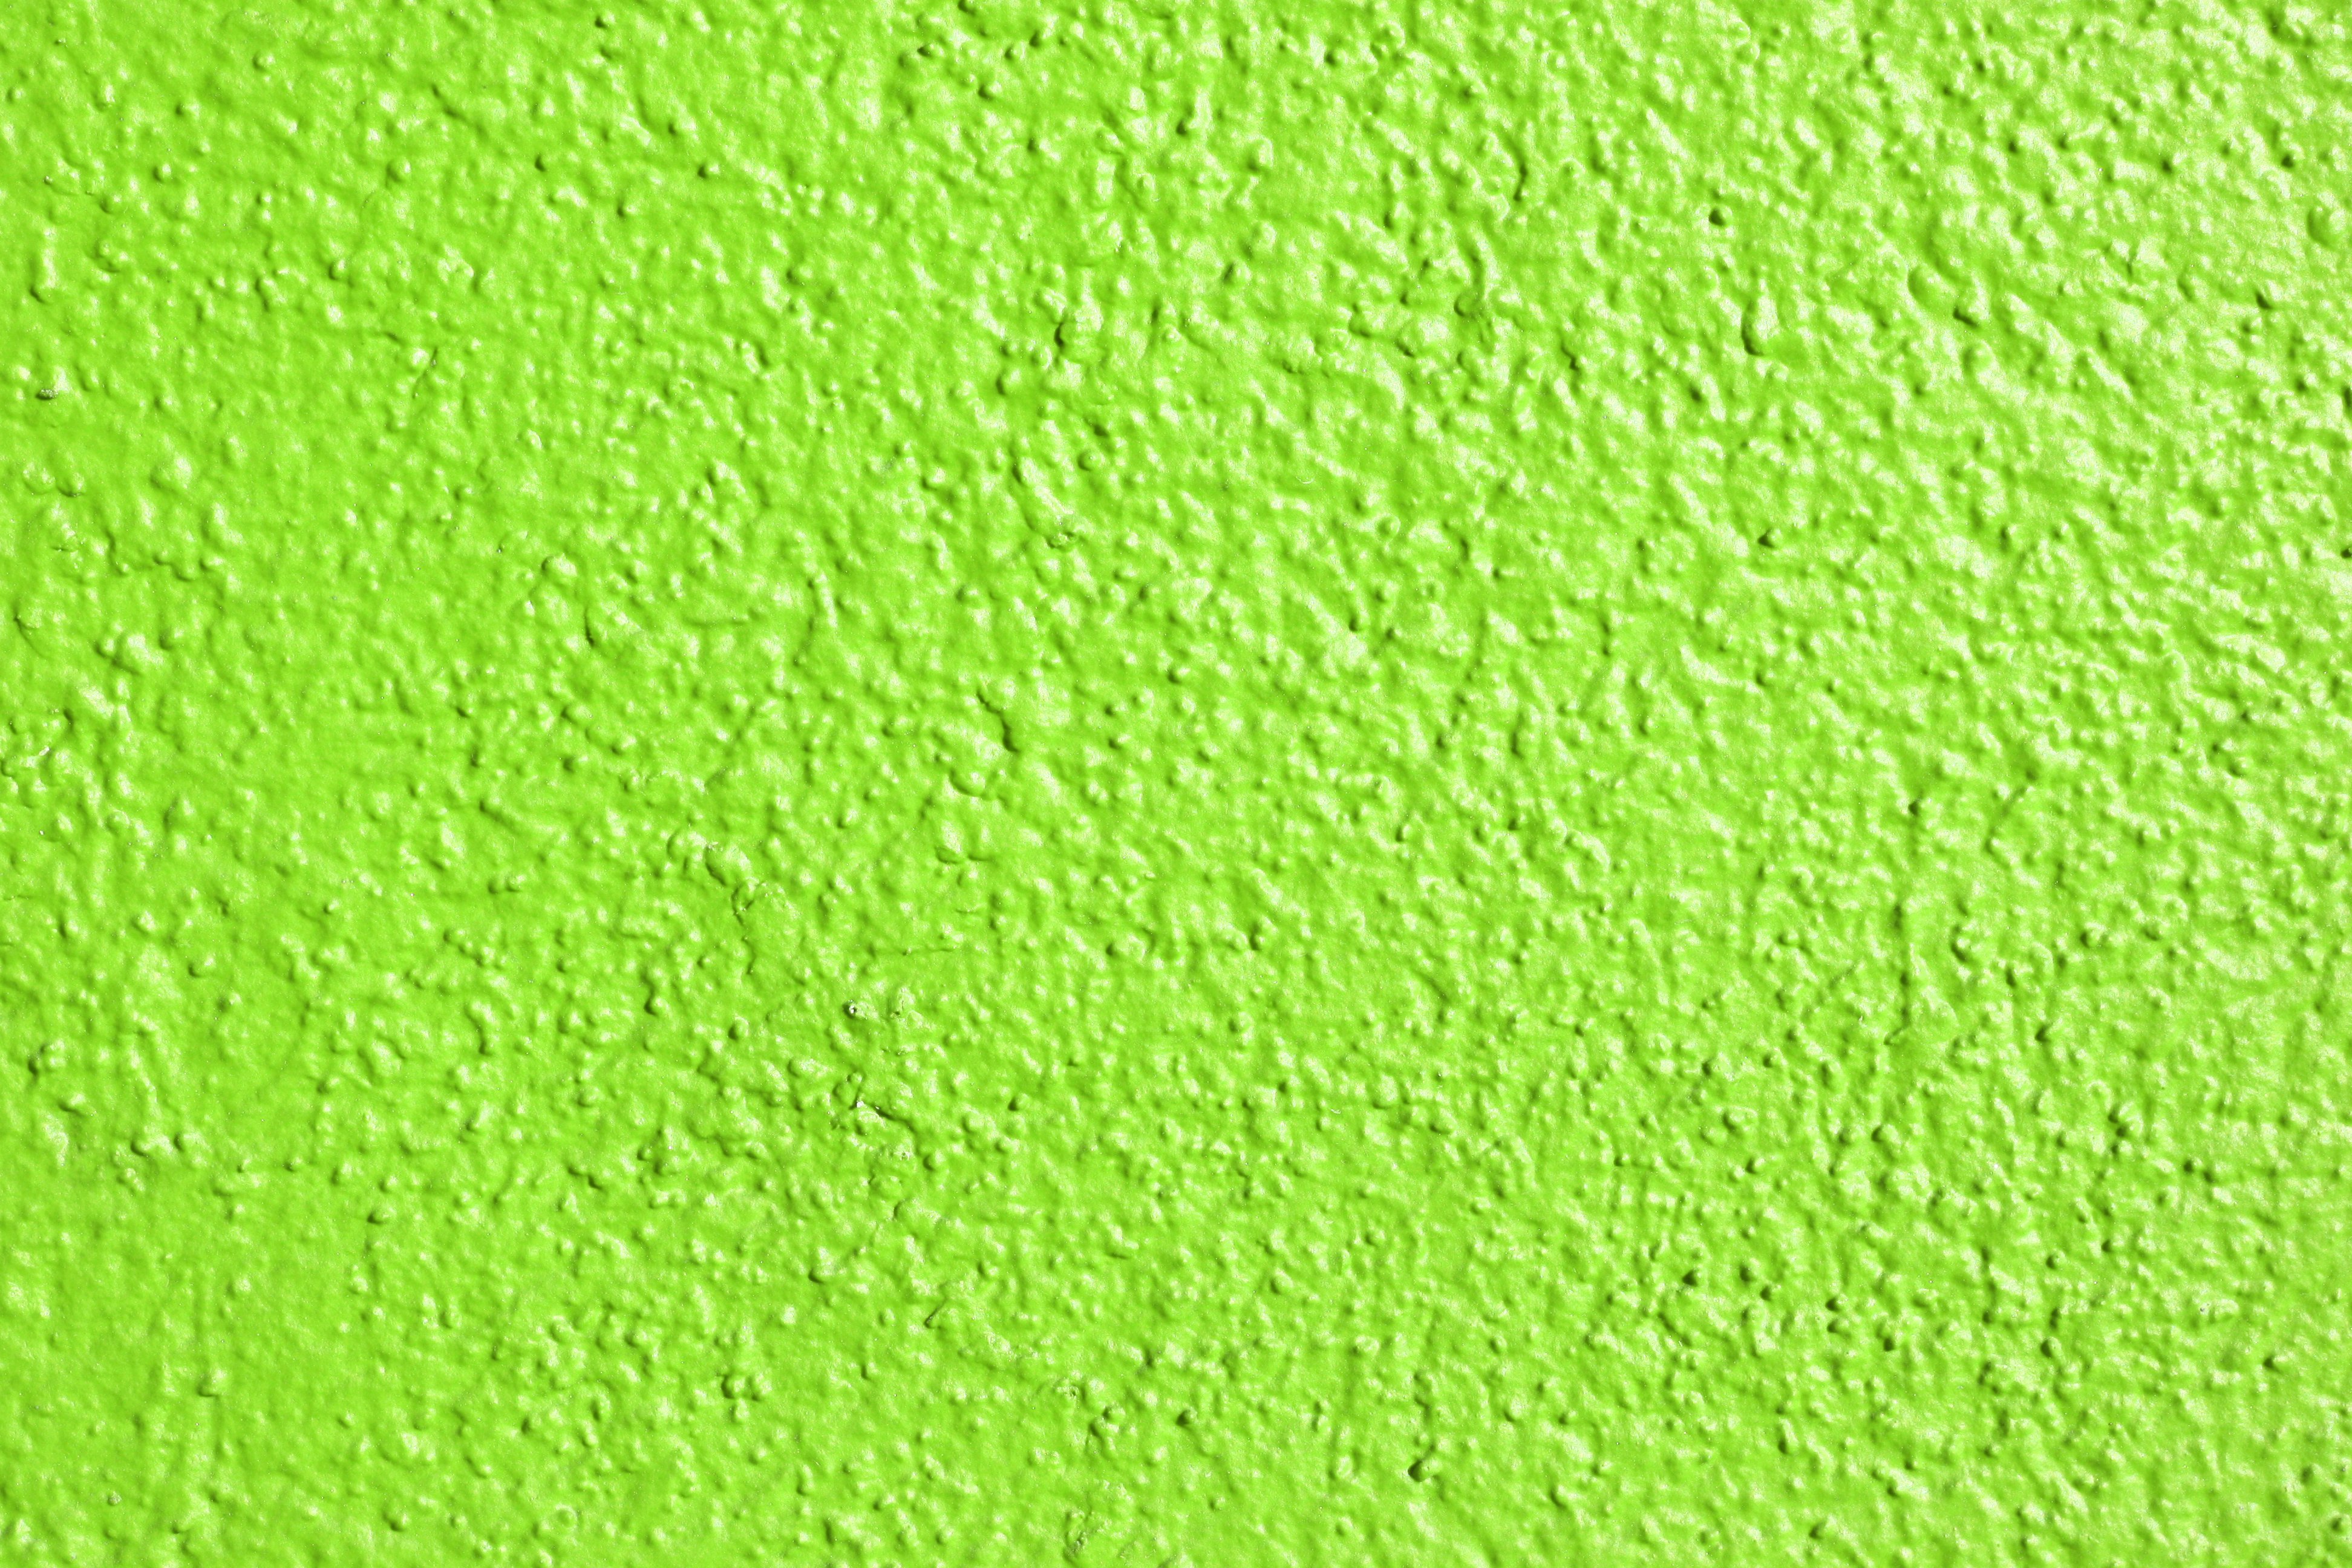 Lime Green Painted Wall Texture Photograph Photos - Billion Estates ...